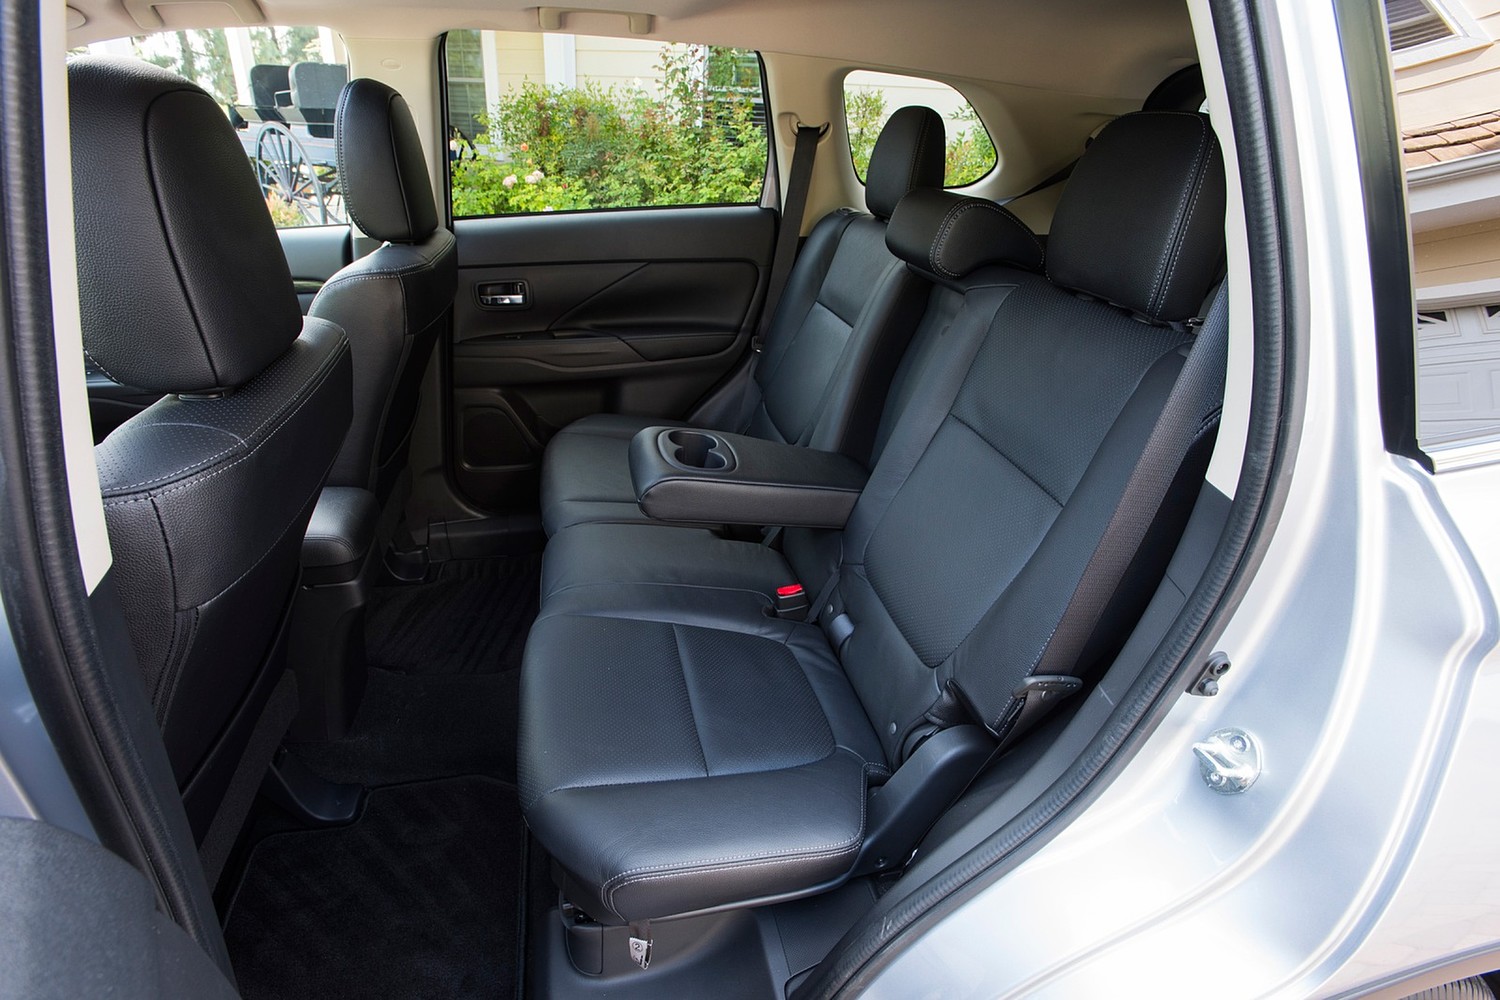 2017 Mitsubishi Outlander GT 4dr SUV Rear Interior Shown